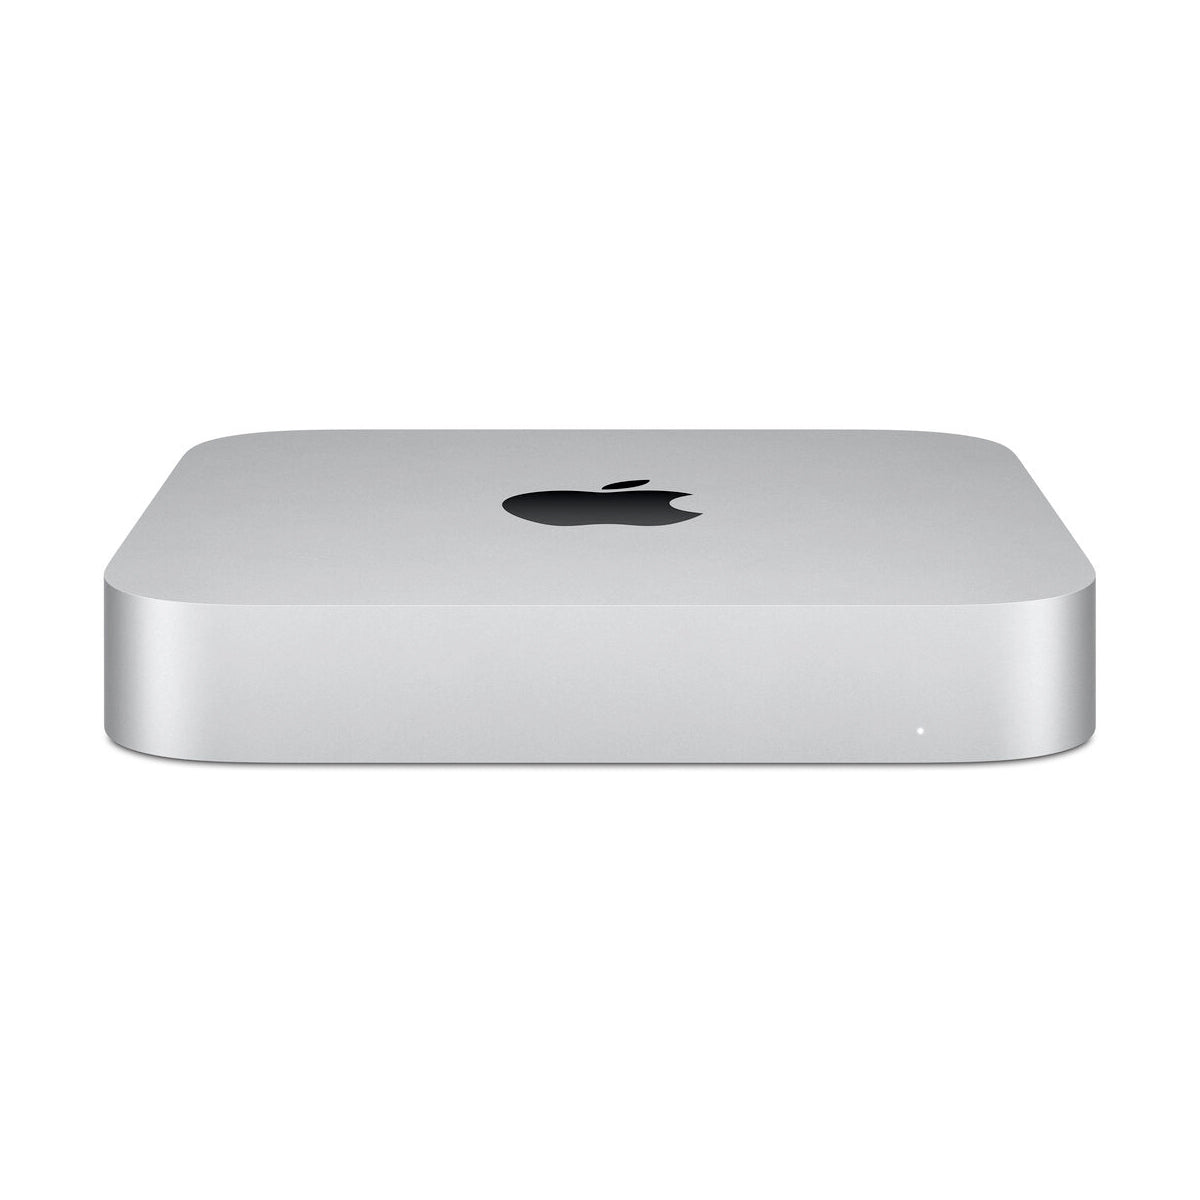 ♥ New, Open Box - Mac Mini M1 8/8-Core 8GB/256GB Silver MGNR3LL/A (2020)